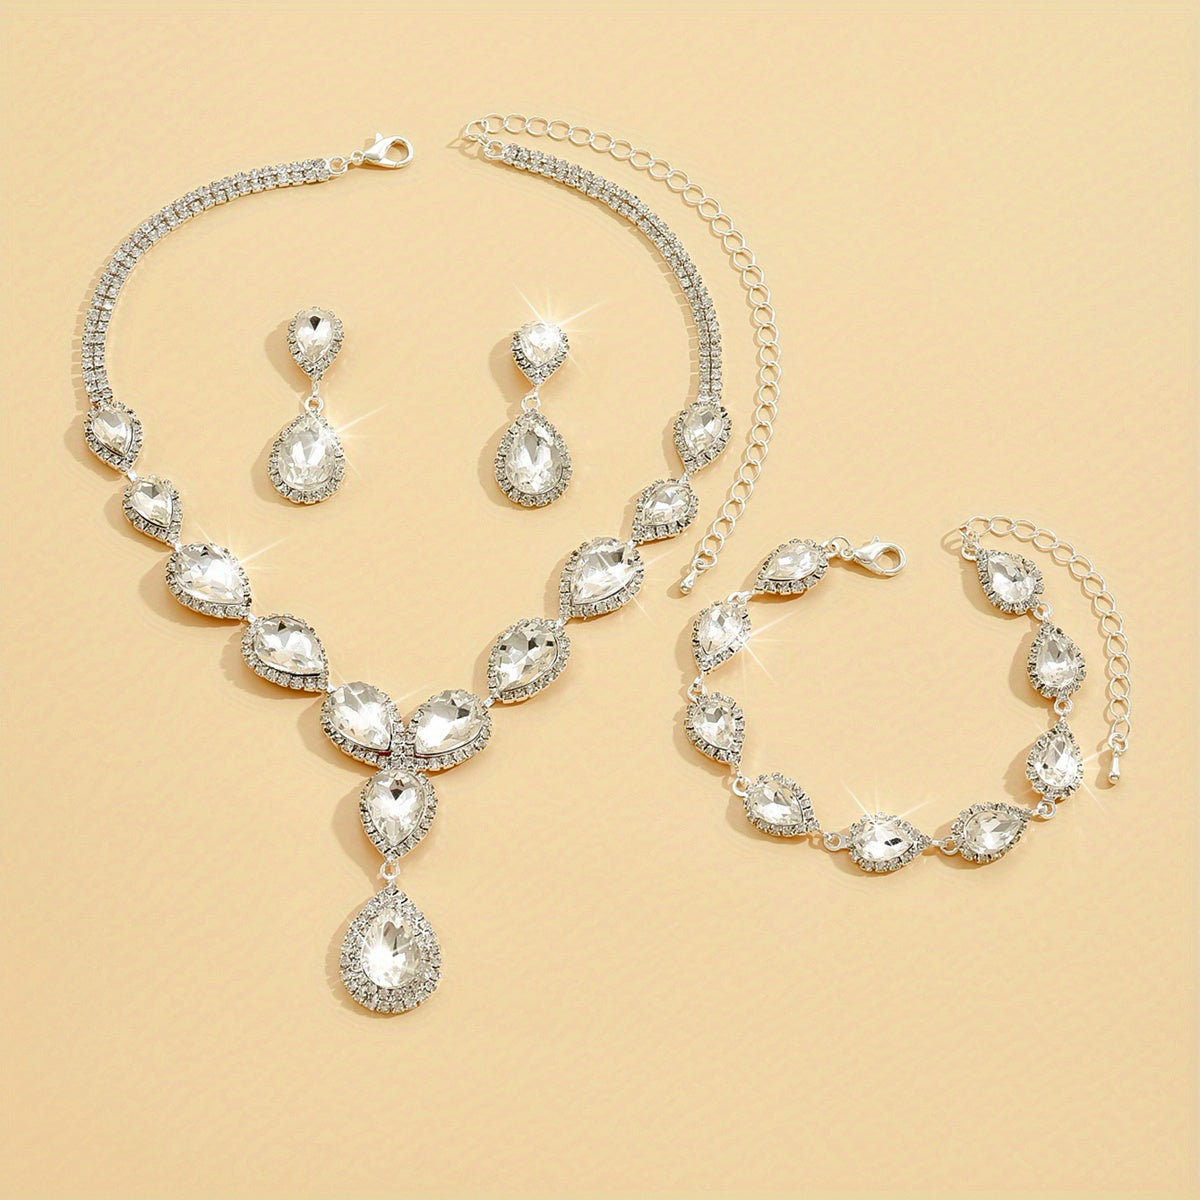 4pcs Earrings Necklace Plus Bracelet Elegant Jewelry Set Silver Plated Inlaid Rhinestone Engagement Wedding Jewelry For Female Evening Party Decor